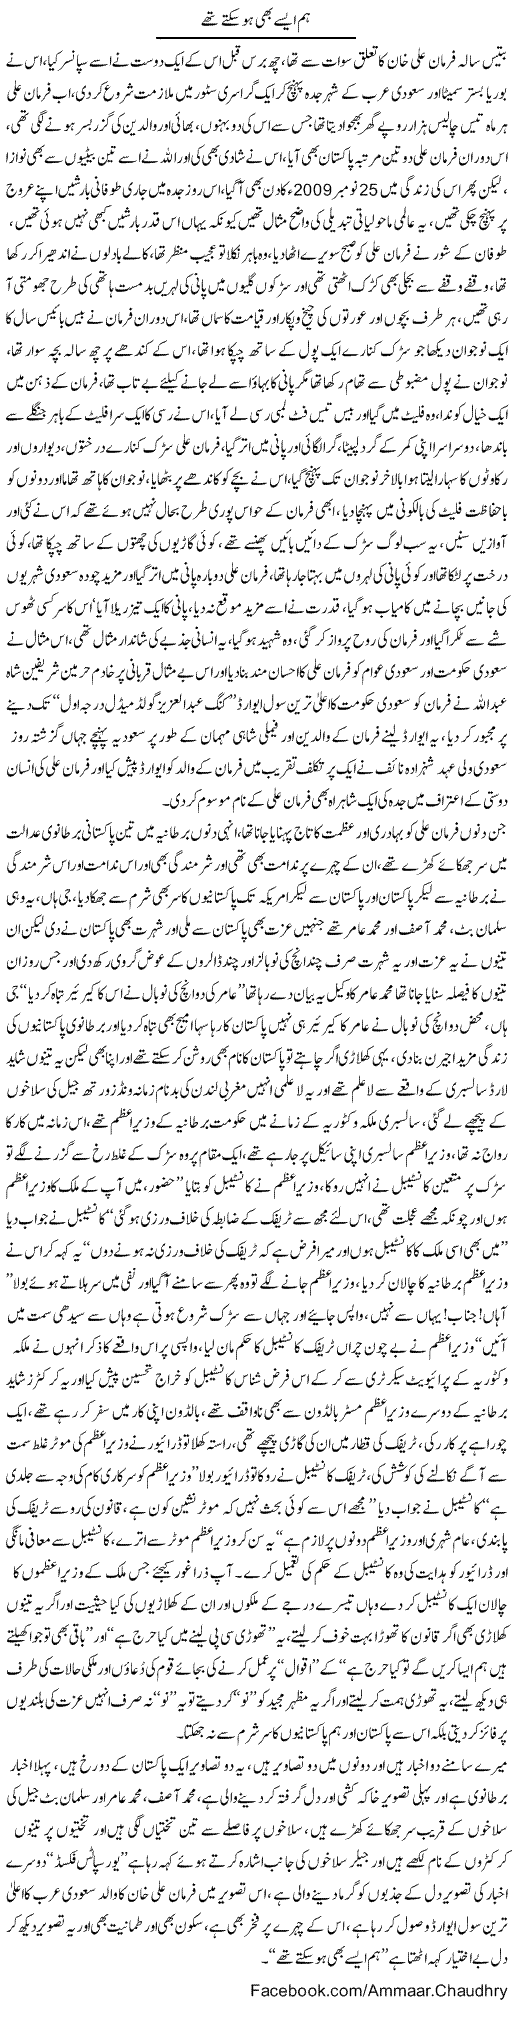 A Great Pakistani Express Column Amad Chaudhry 13 November 2011